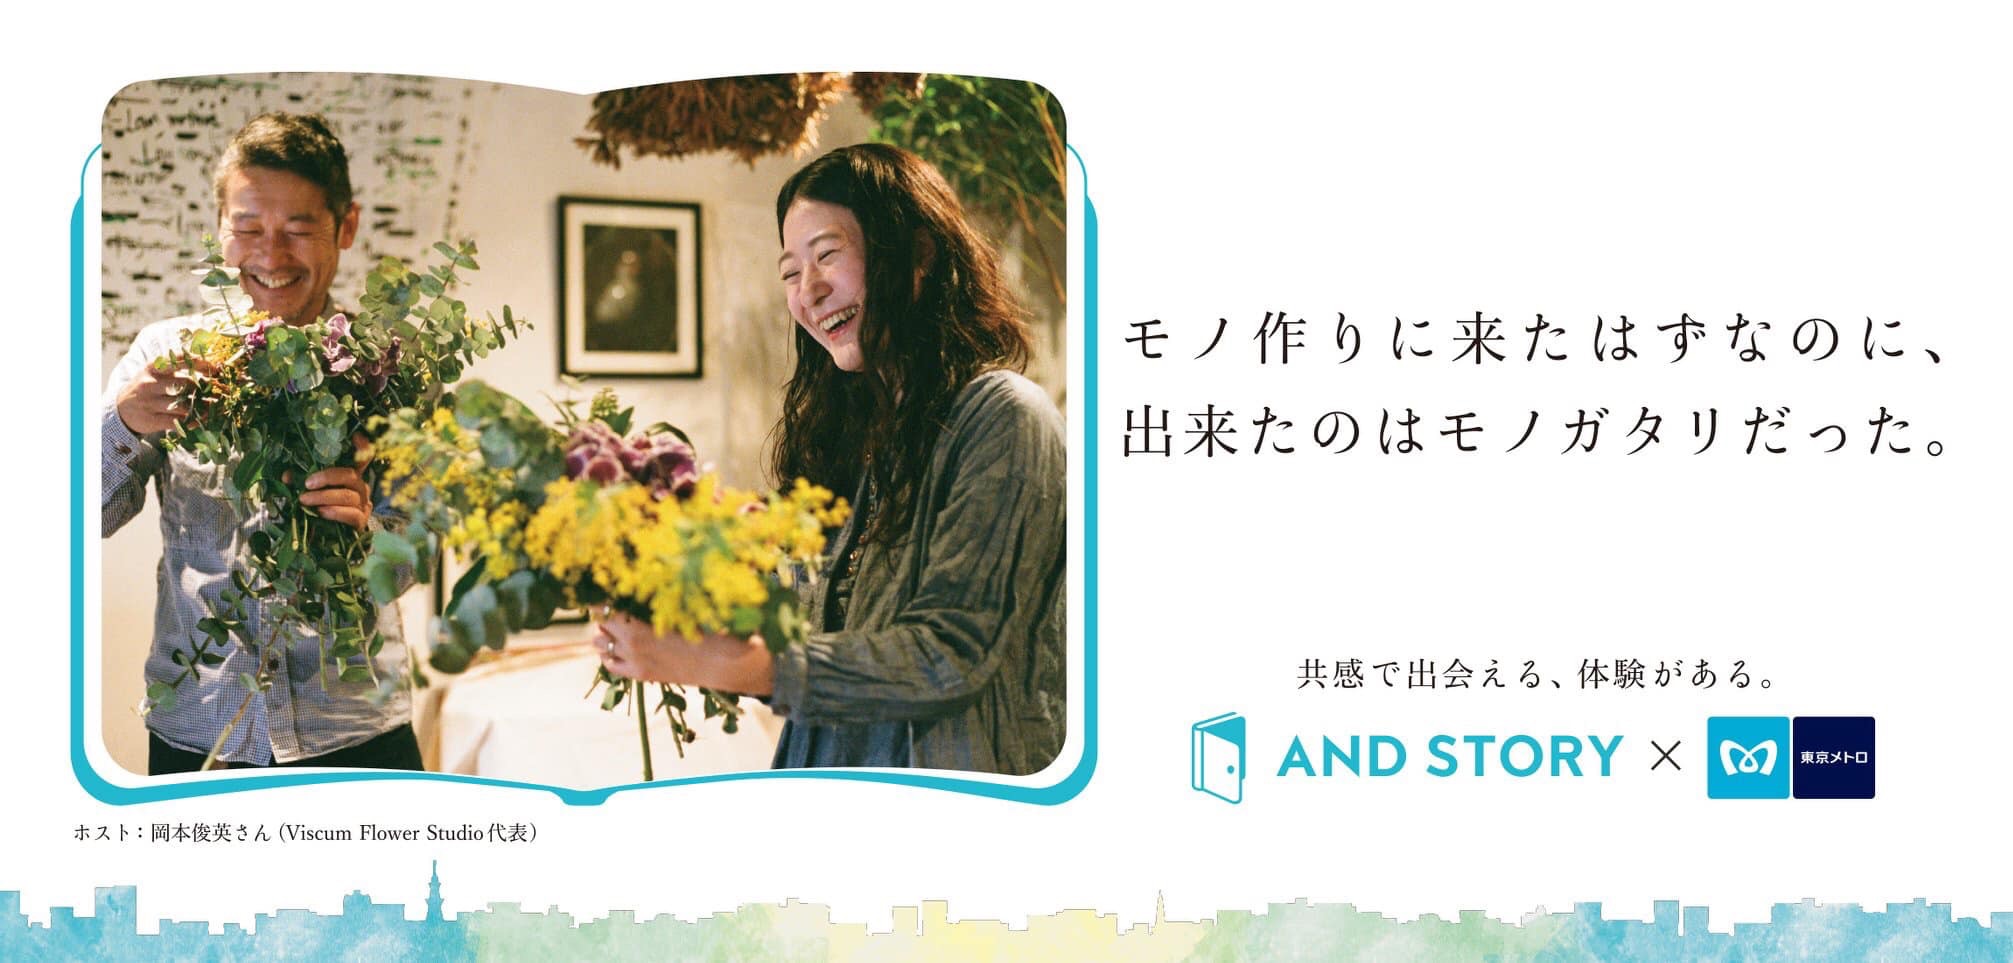 2019/03/13 wed 東京メトロの広告